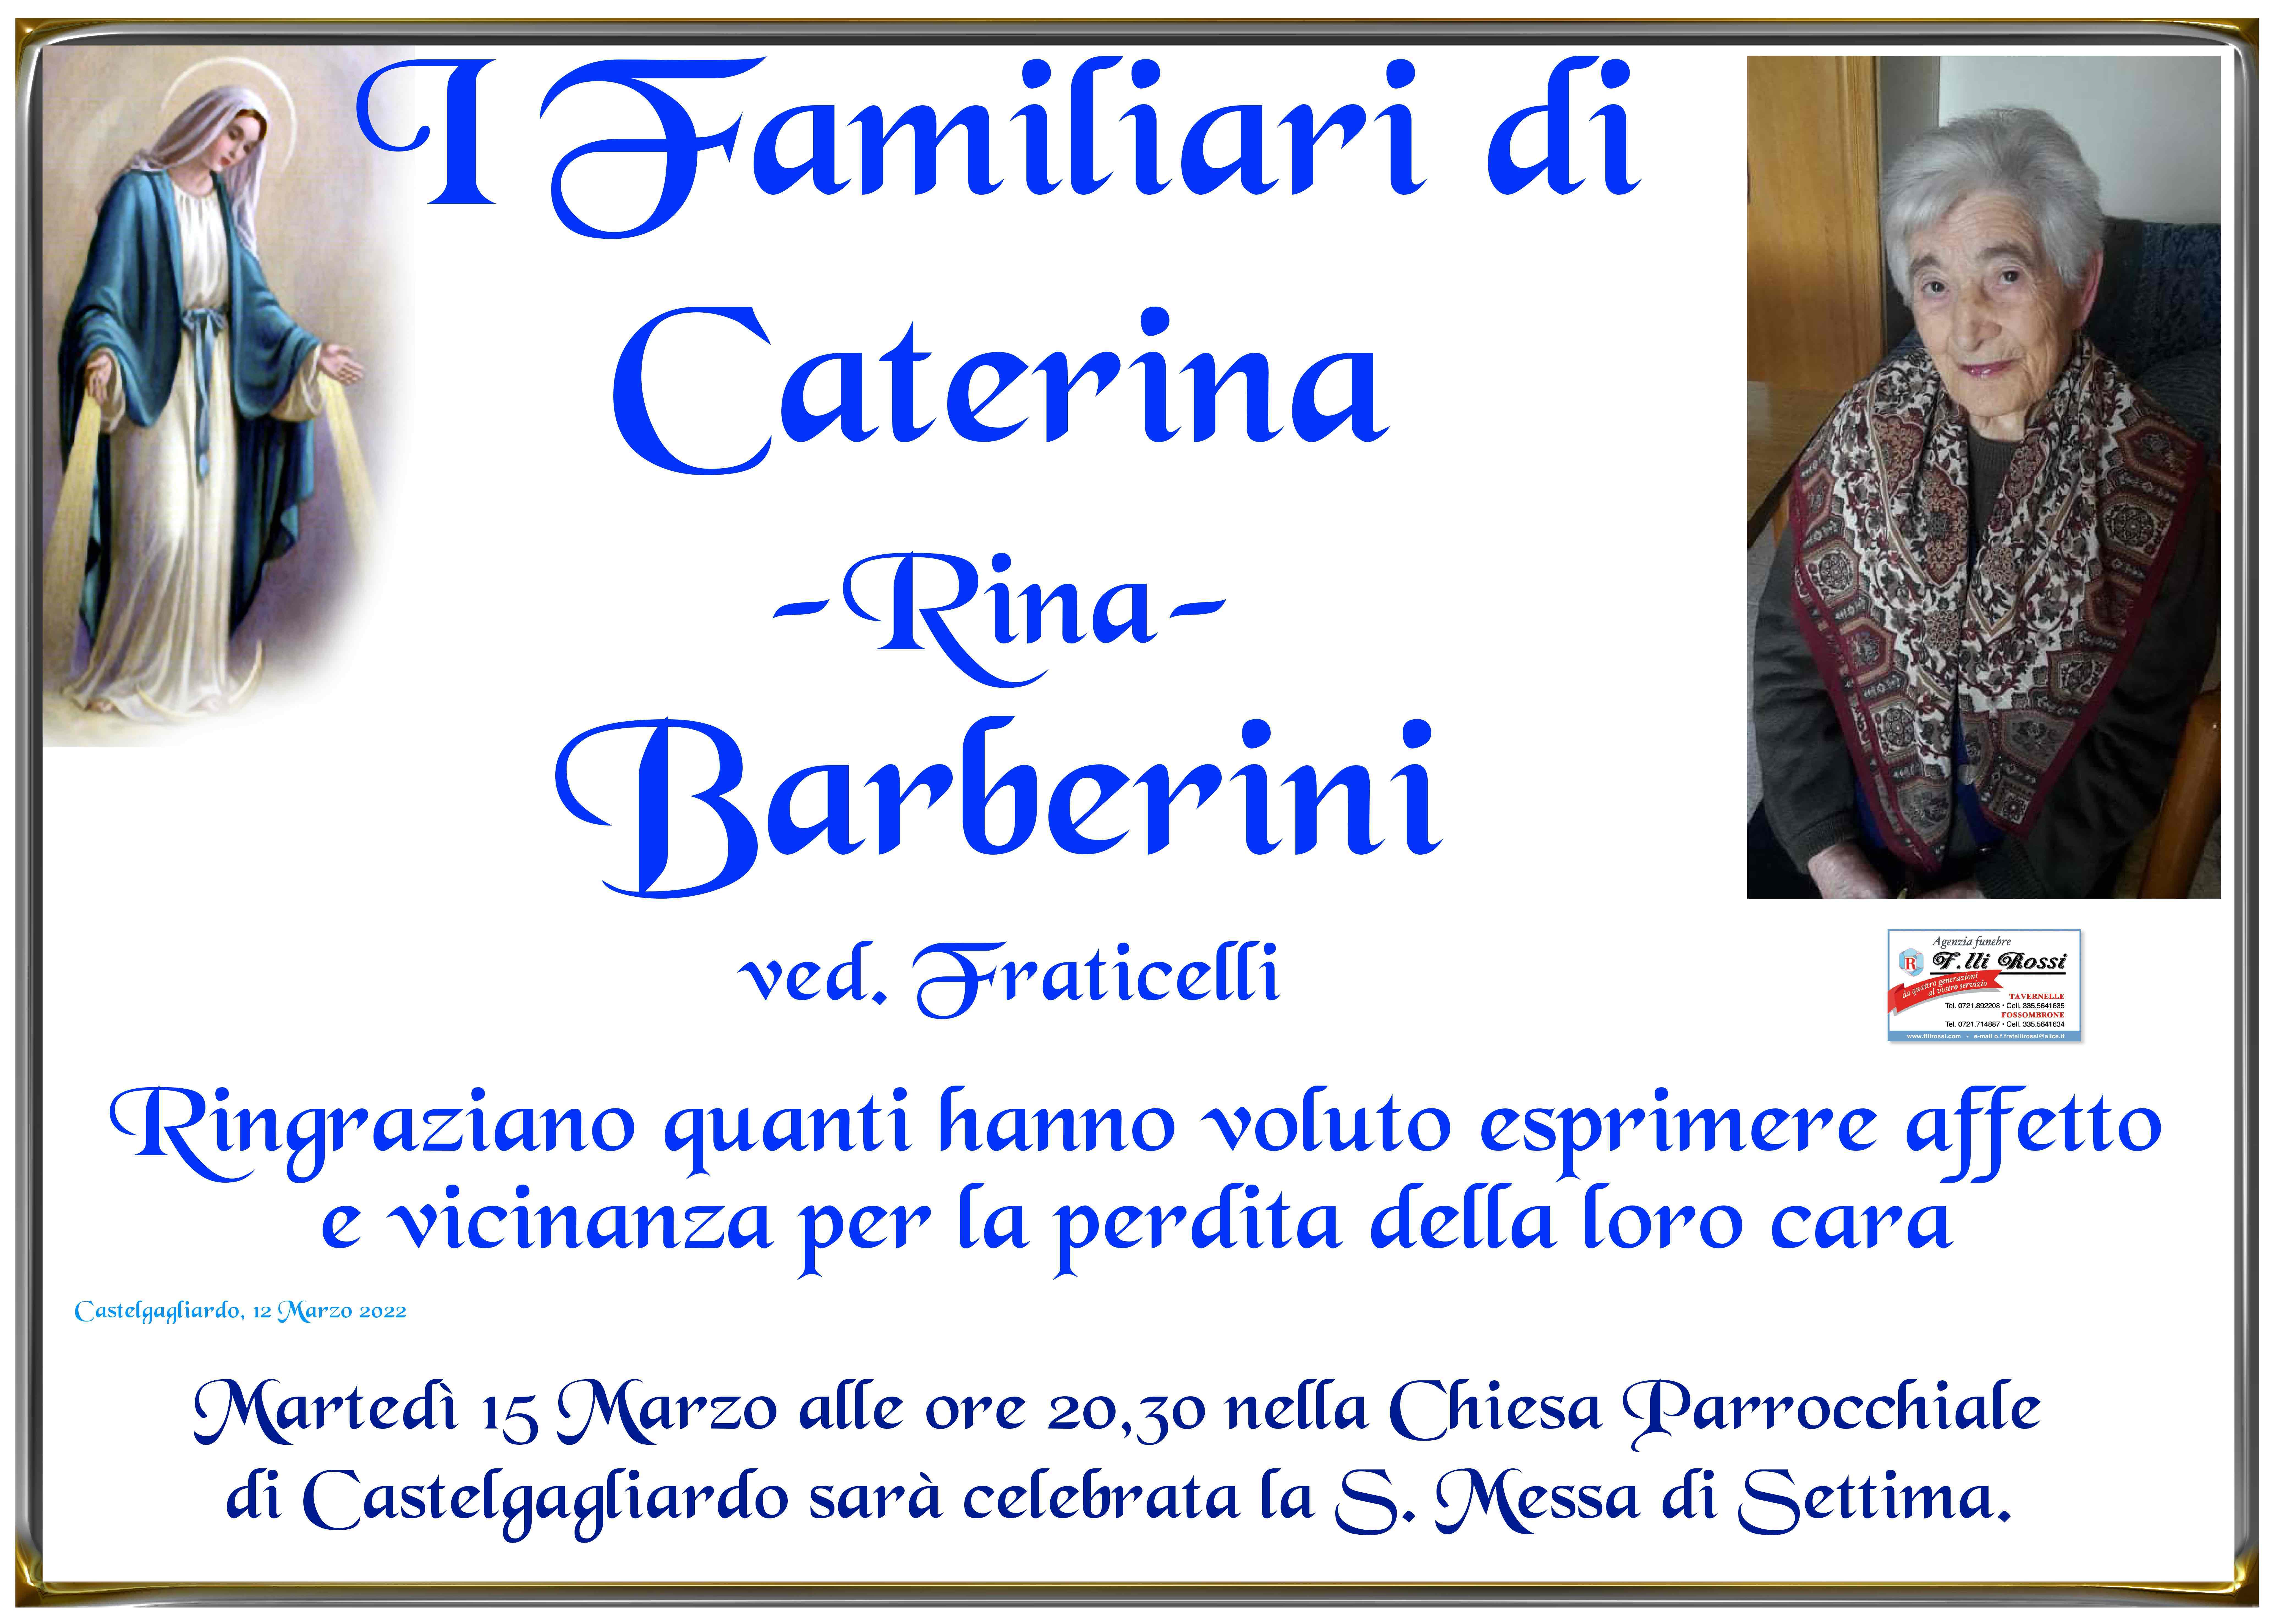 Caterina Barberini